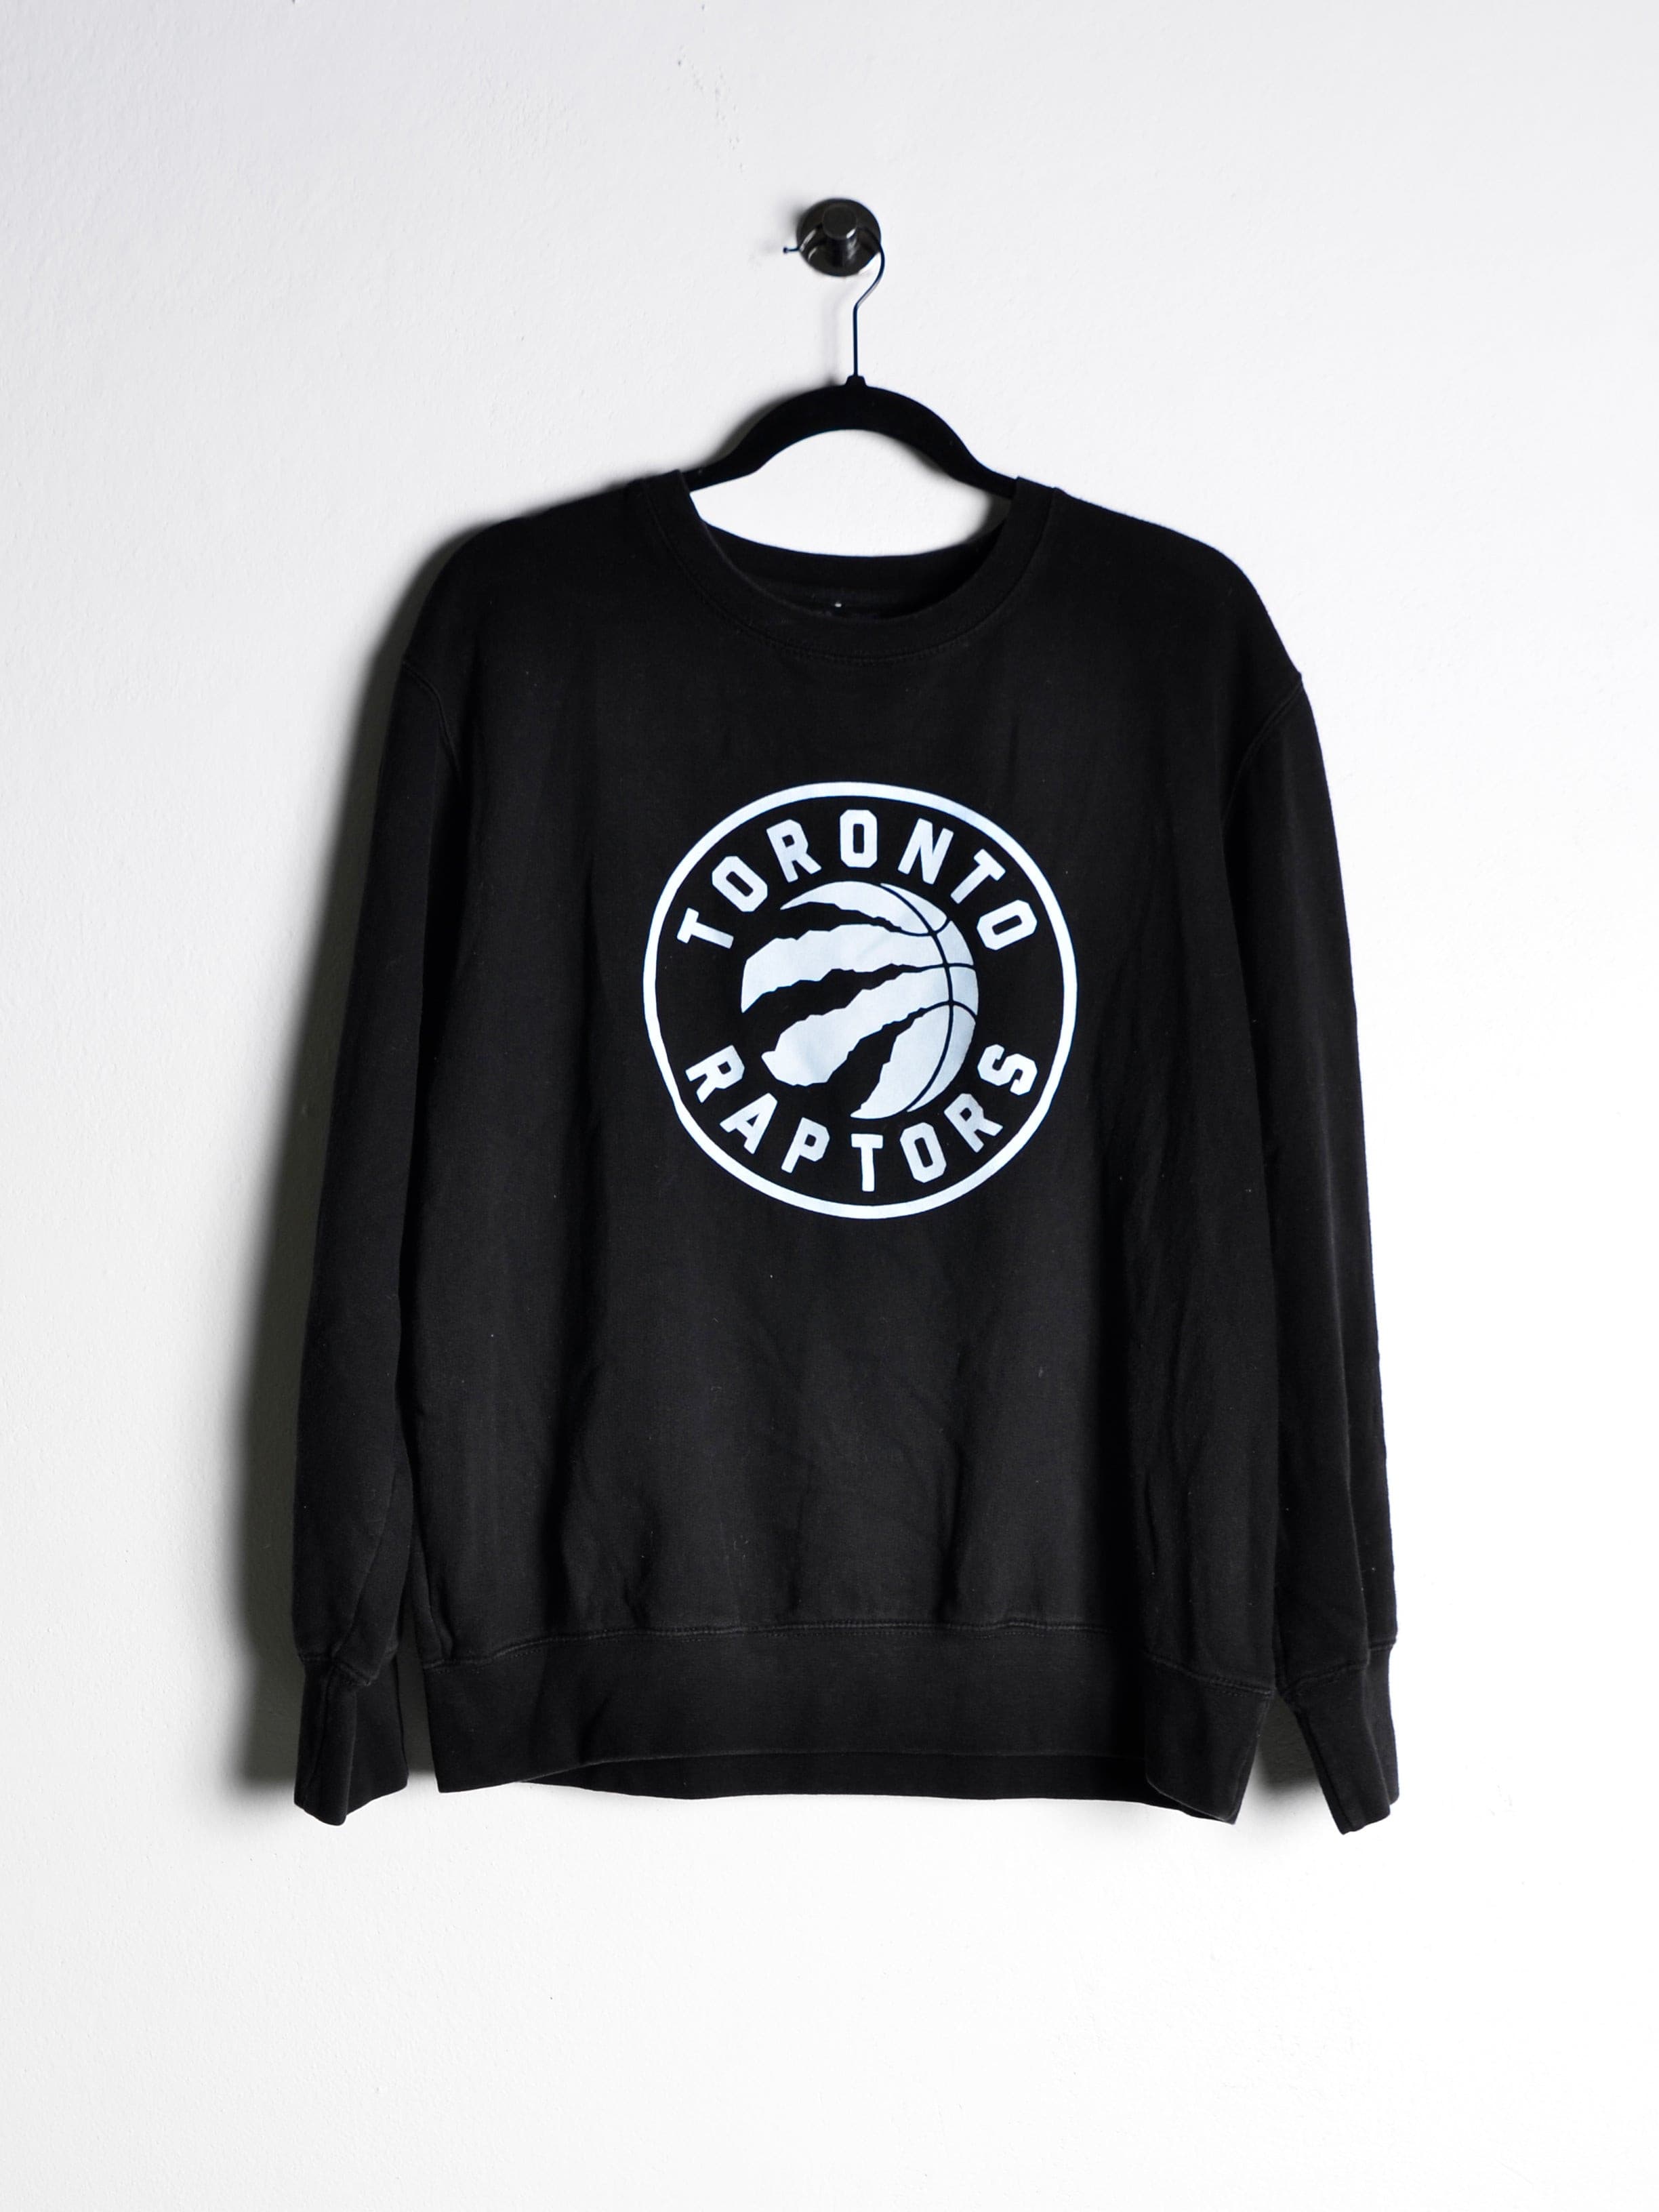 NBA Toronto Raptors Sweatshirt Black // Small - RHAGHOUSE VINTAGE